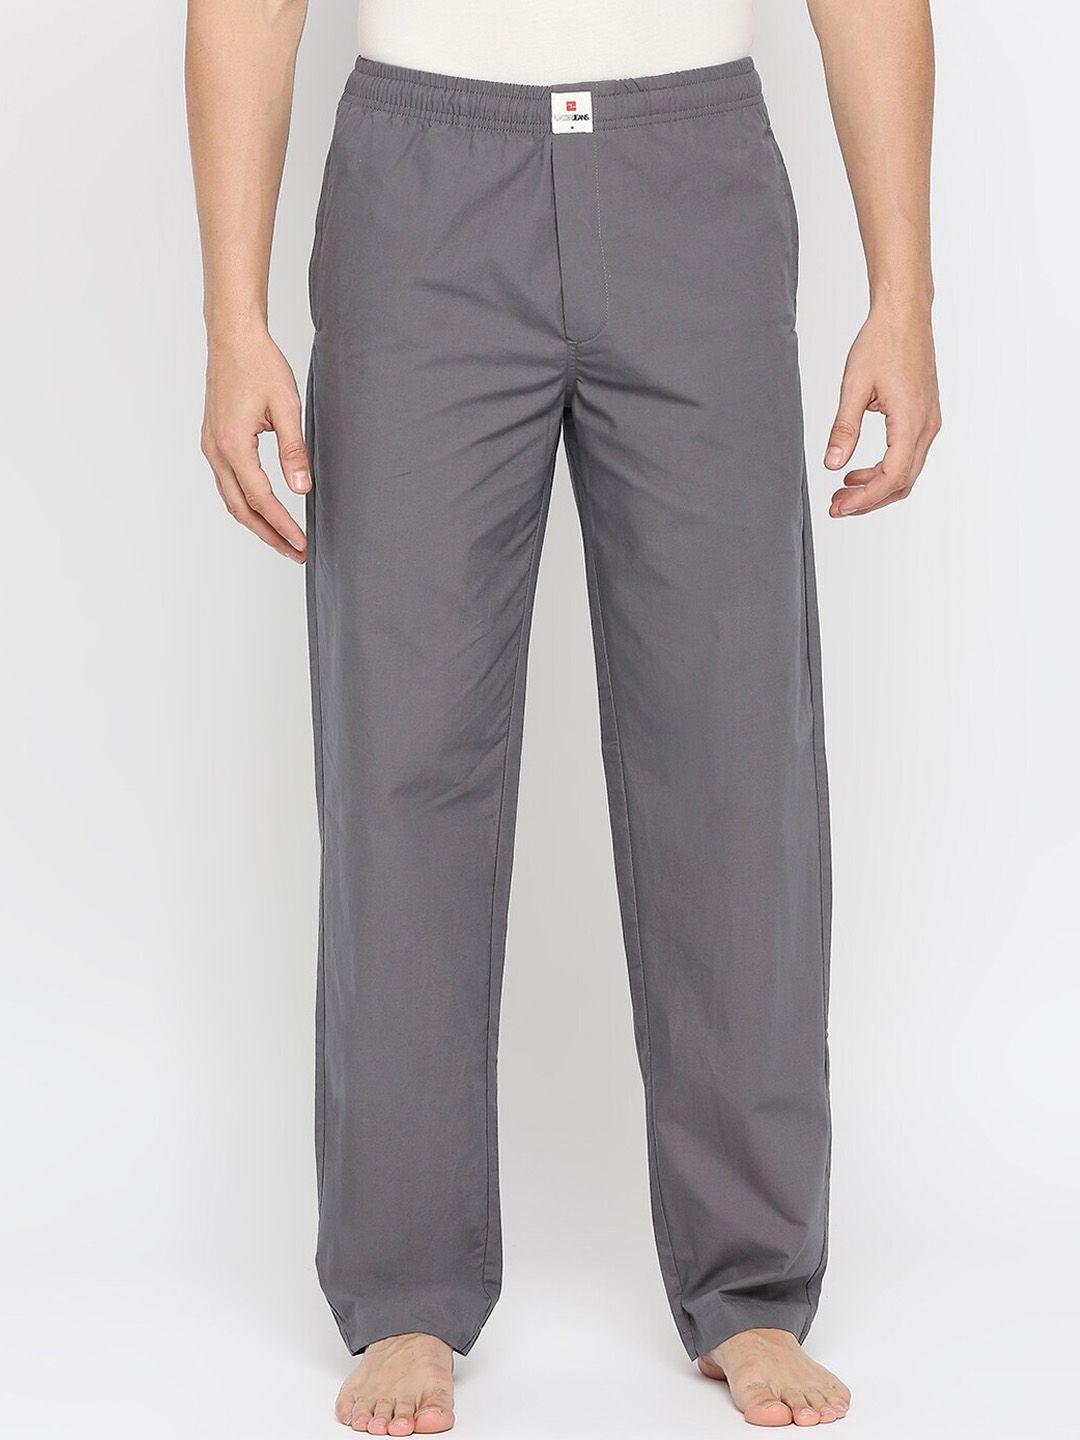 underjeans-by-spykar-men-mid-rise-cotton-straight-lounge-pants